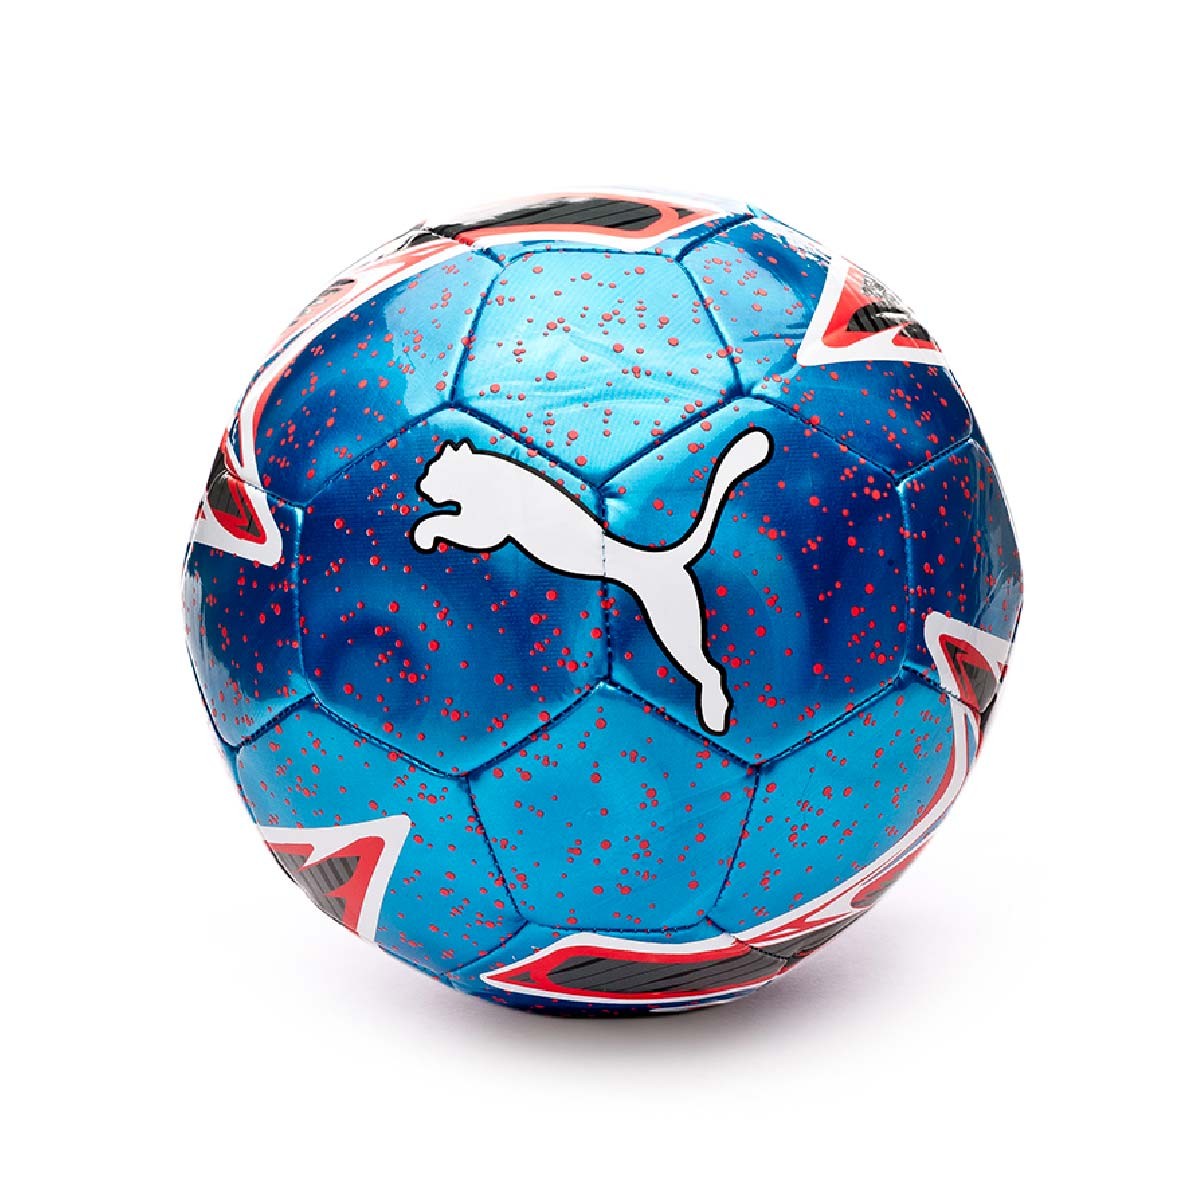 Ball Puma One Laser Bleu azur-Red blast-White - Football store Fútbol  Emotion